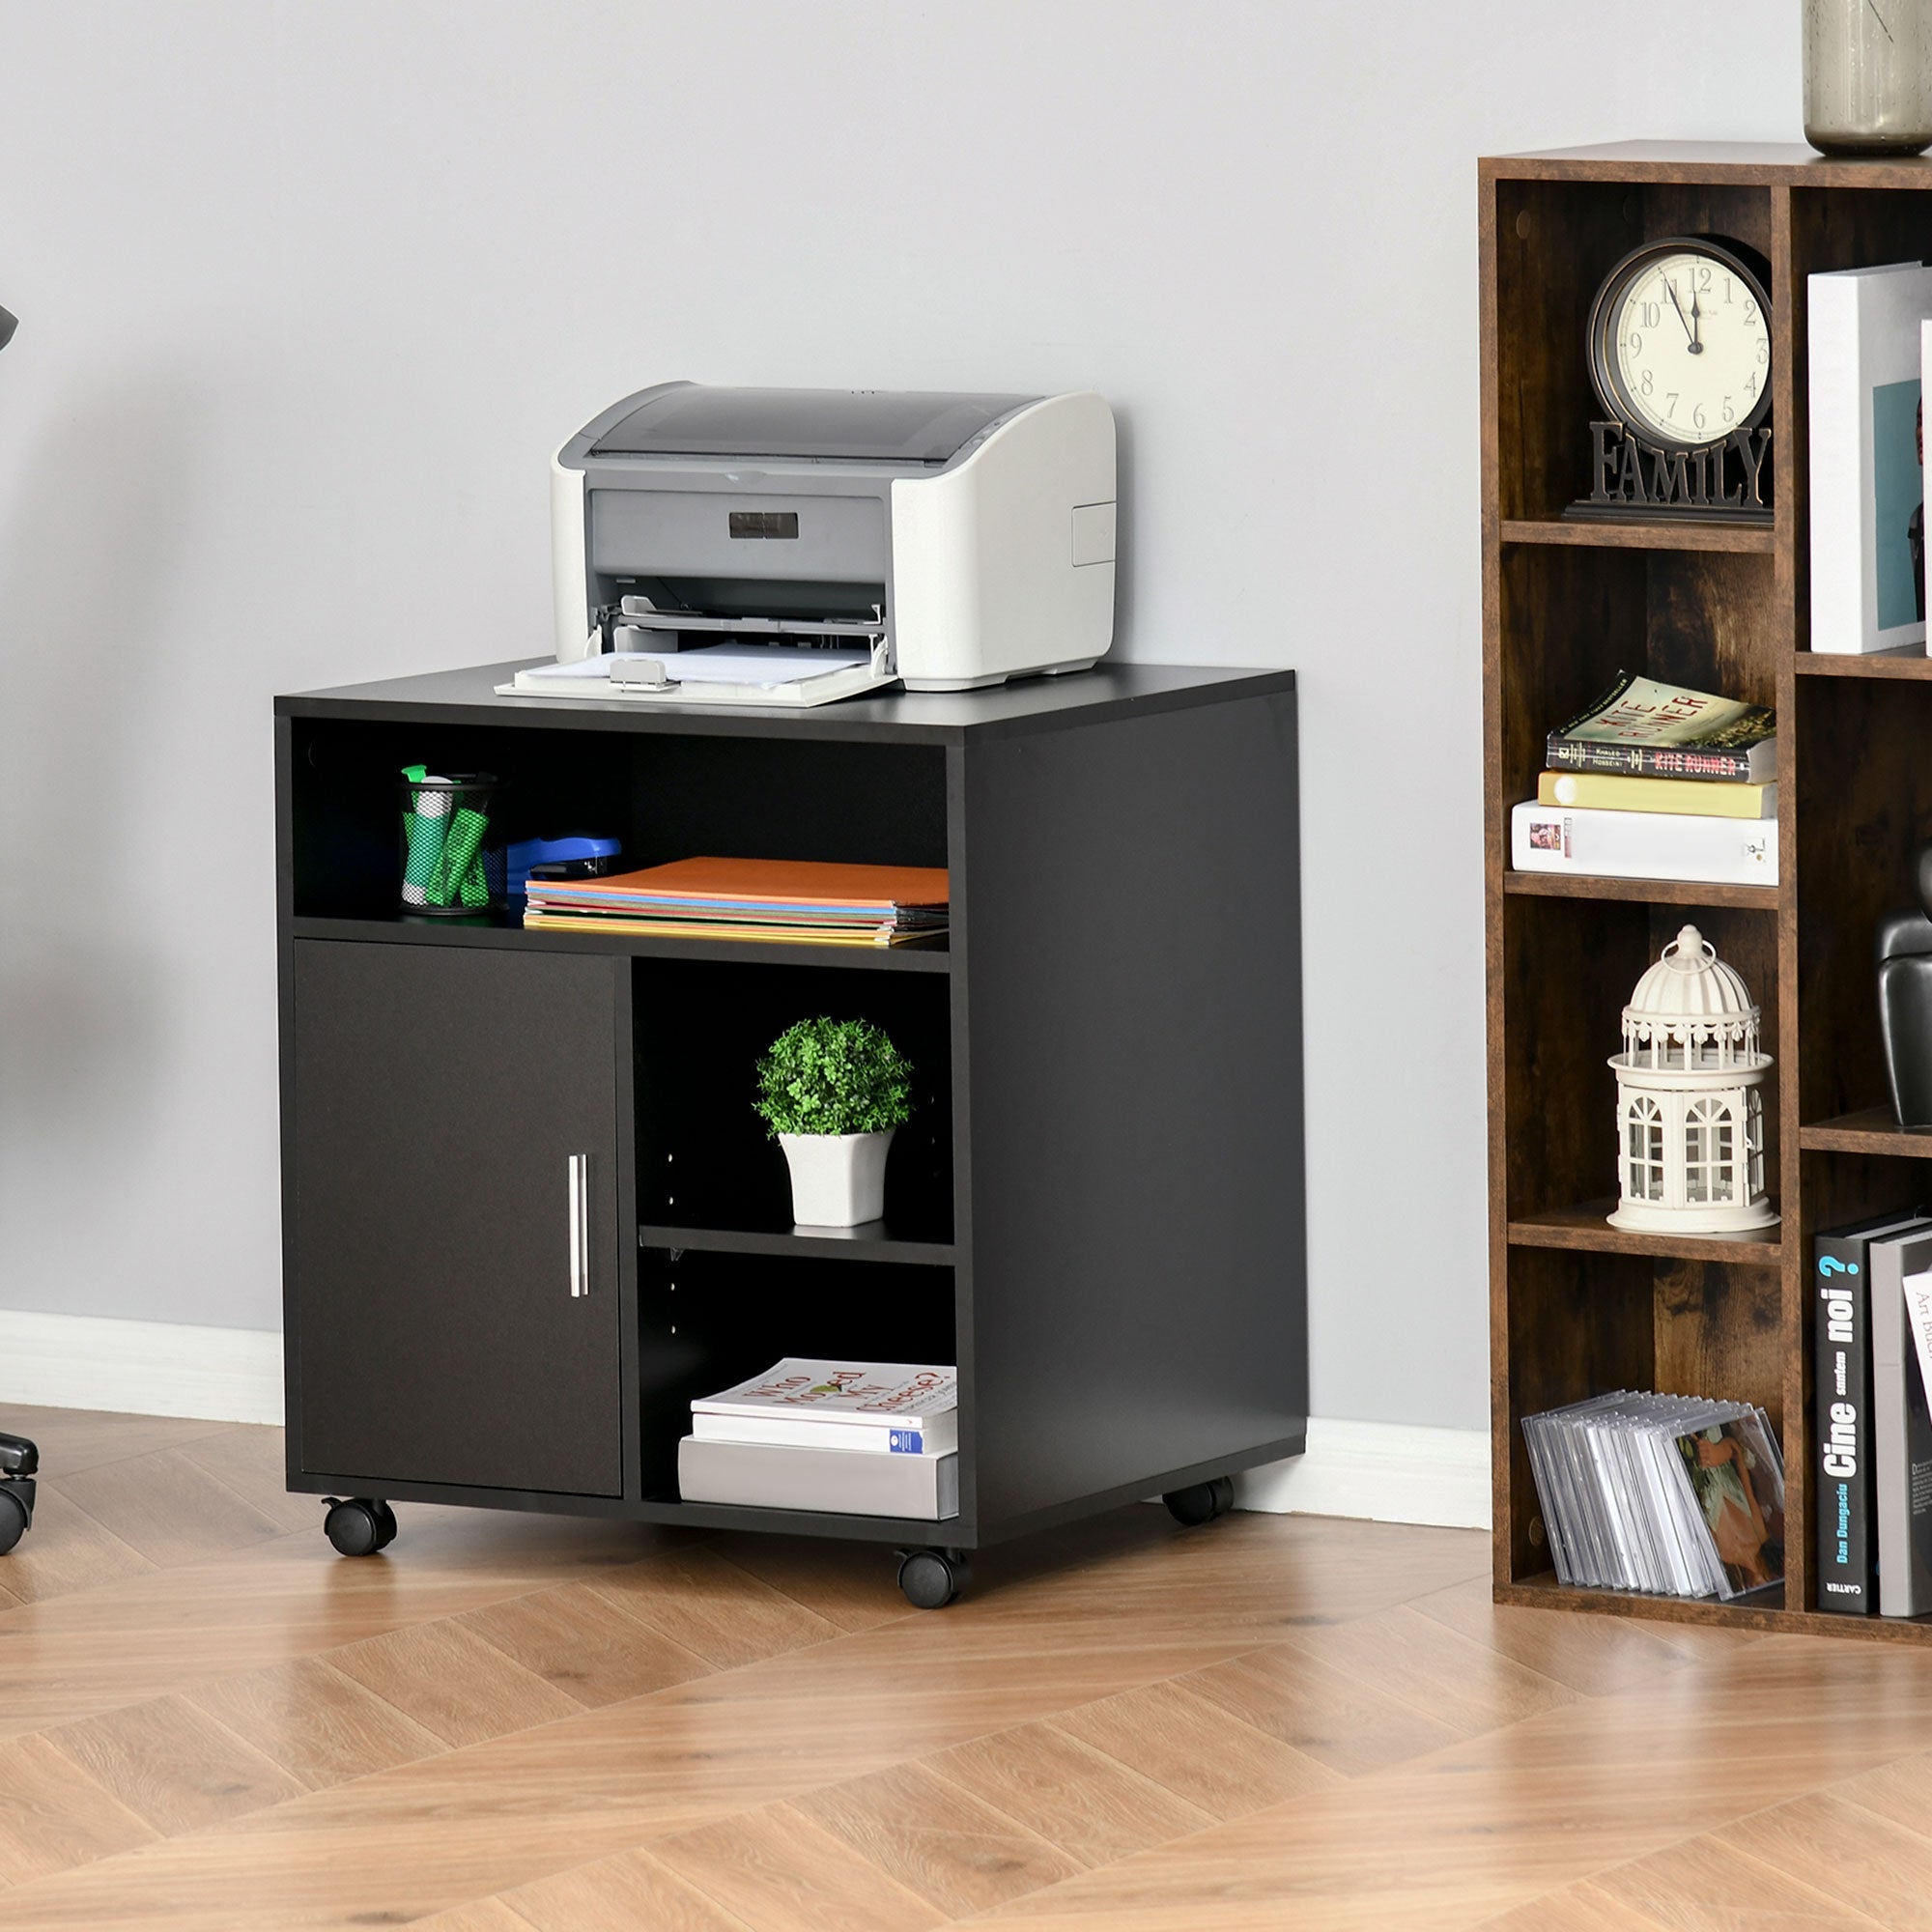 Multi-Storage Printer Stand Unit Office Desk Side Mobile Storage w/ Wheels Modern Style 60L x 50W x 65.5H cm - Black-3